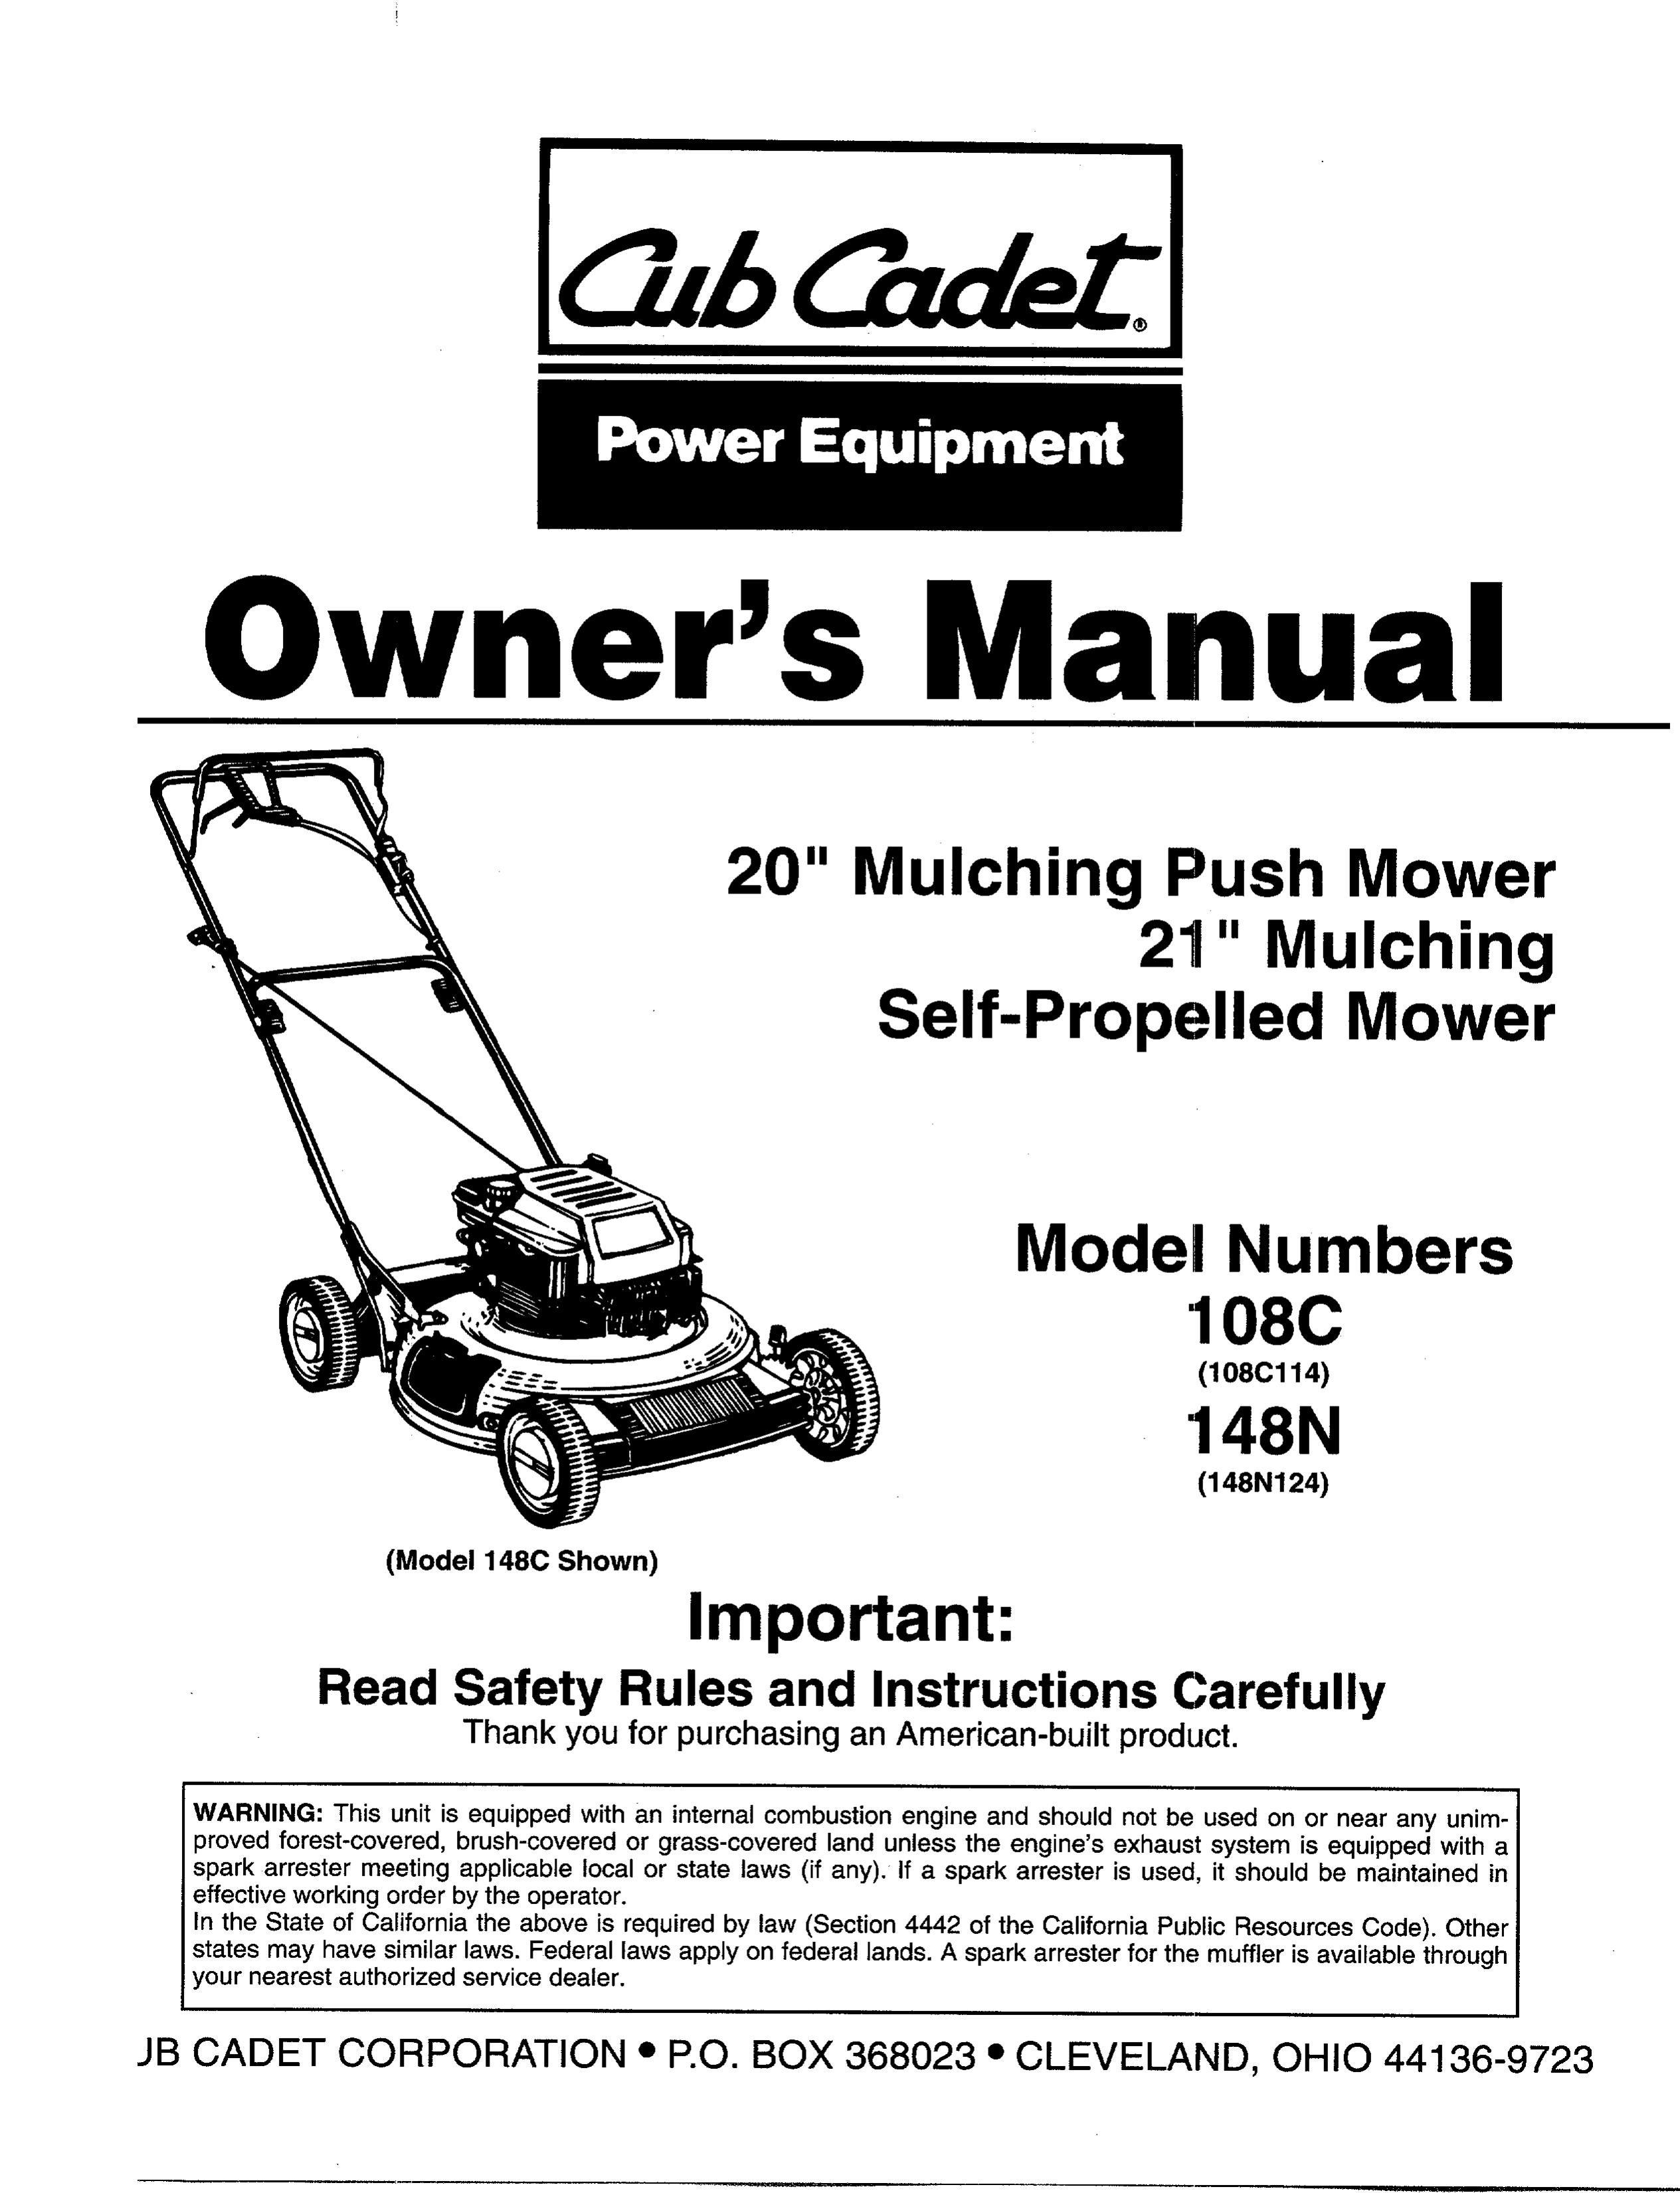 Cub Cadet 108C Lawn Mower User Manual